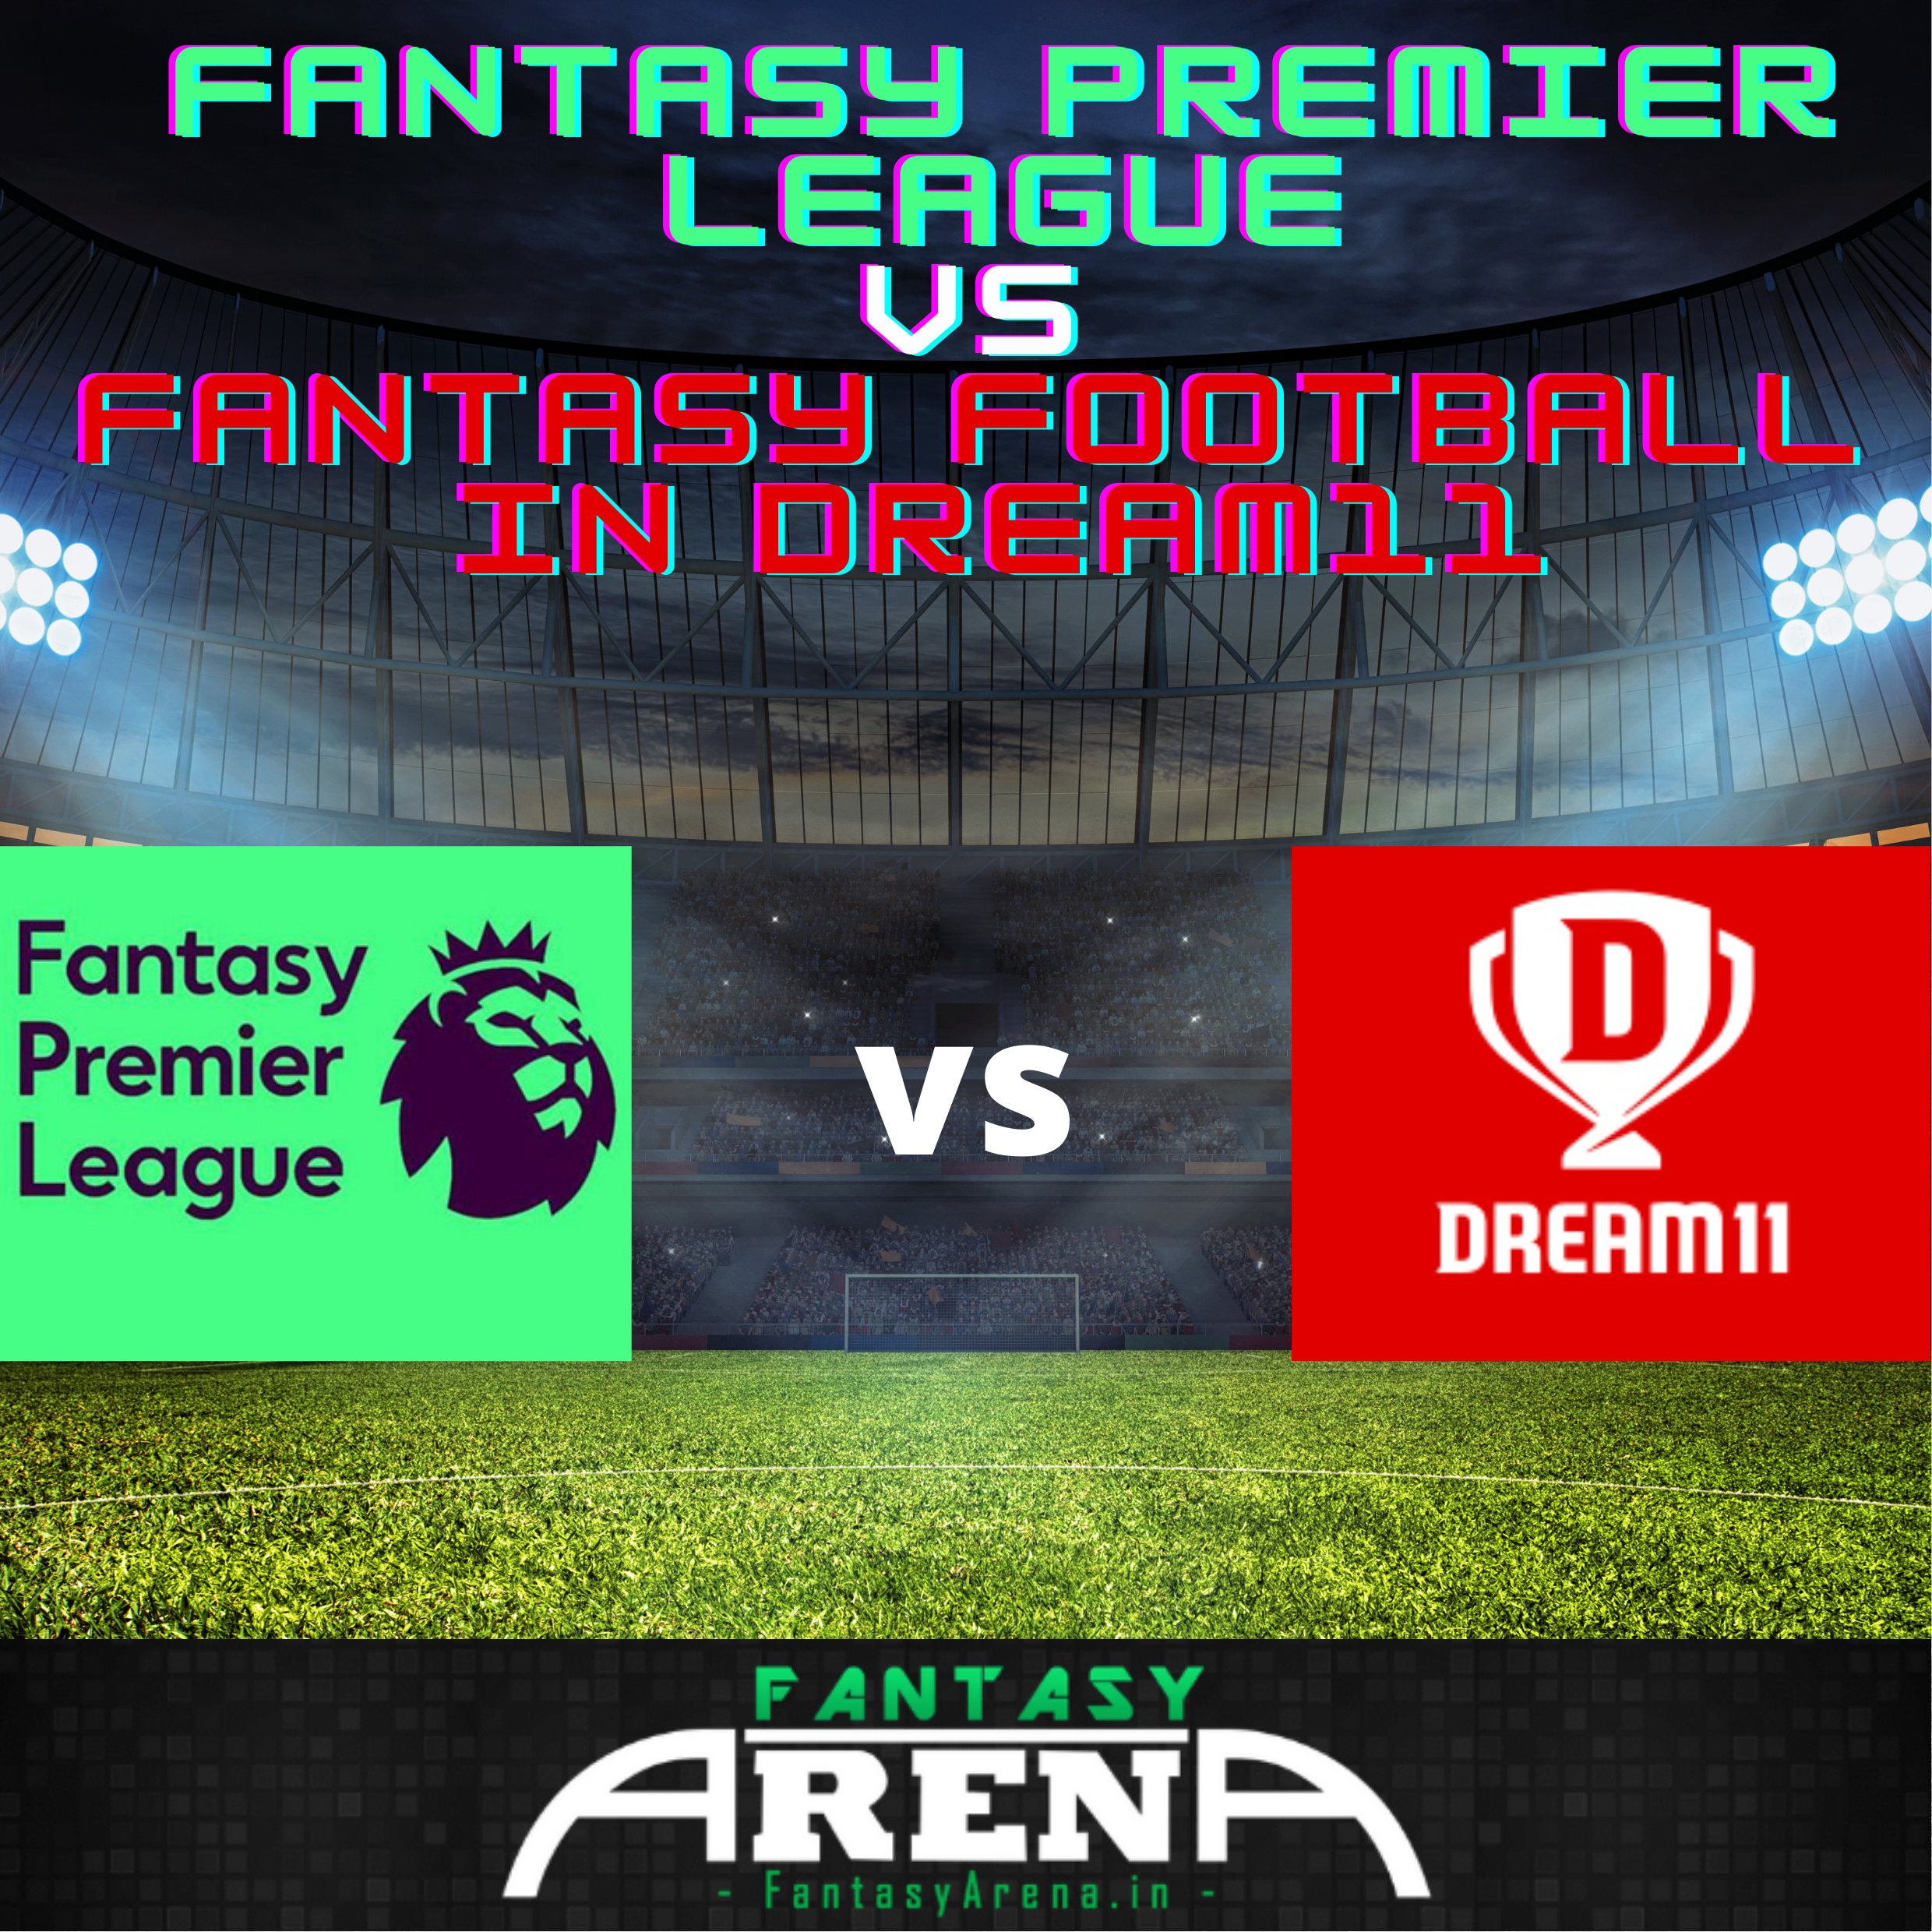 Fantasy Premier League vs Fantasy Football in DREAM11